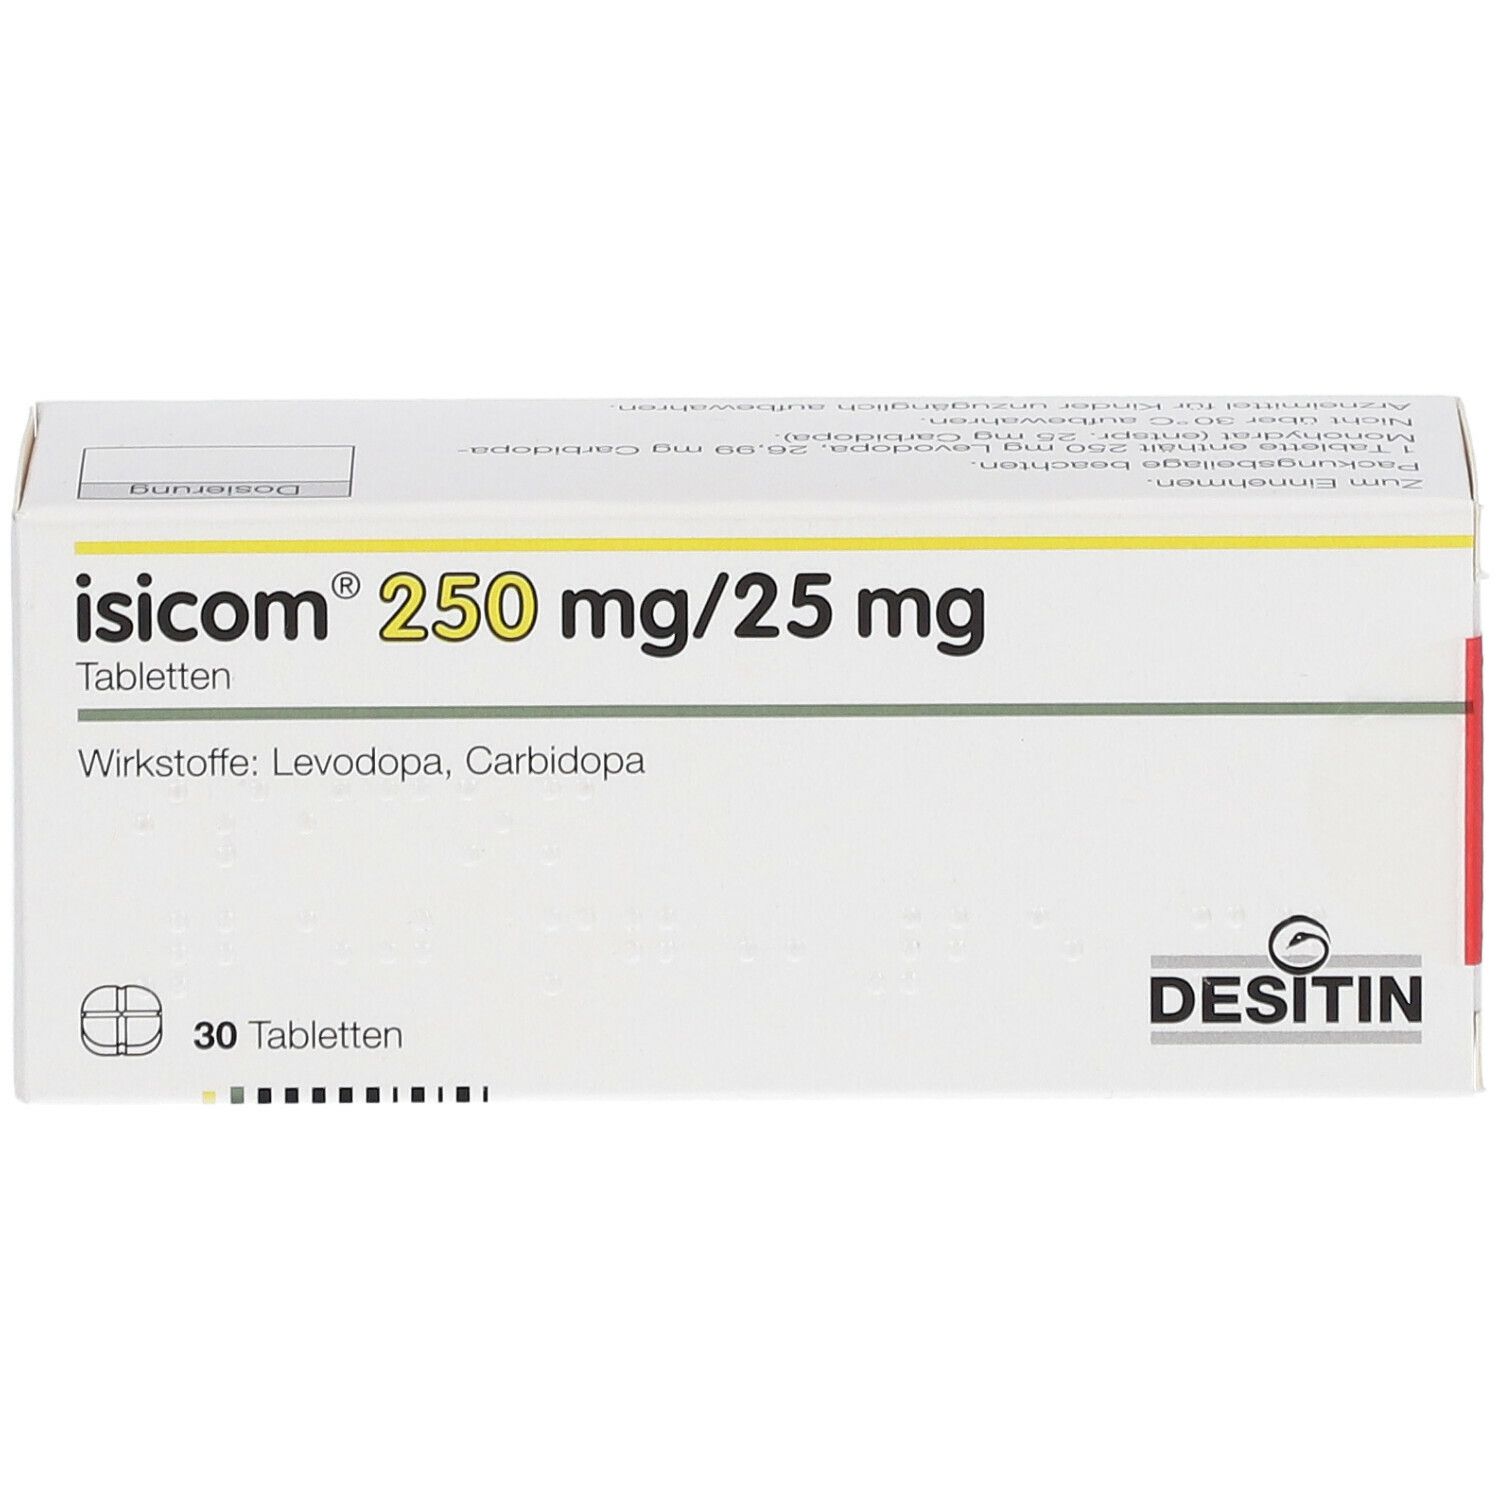 isicom® 250 mg